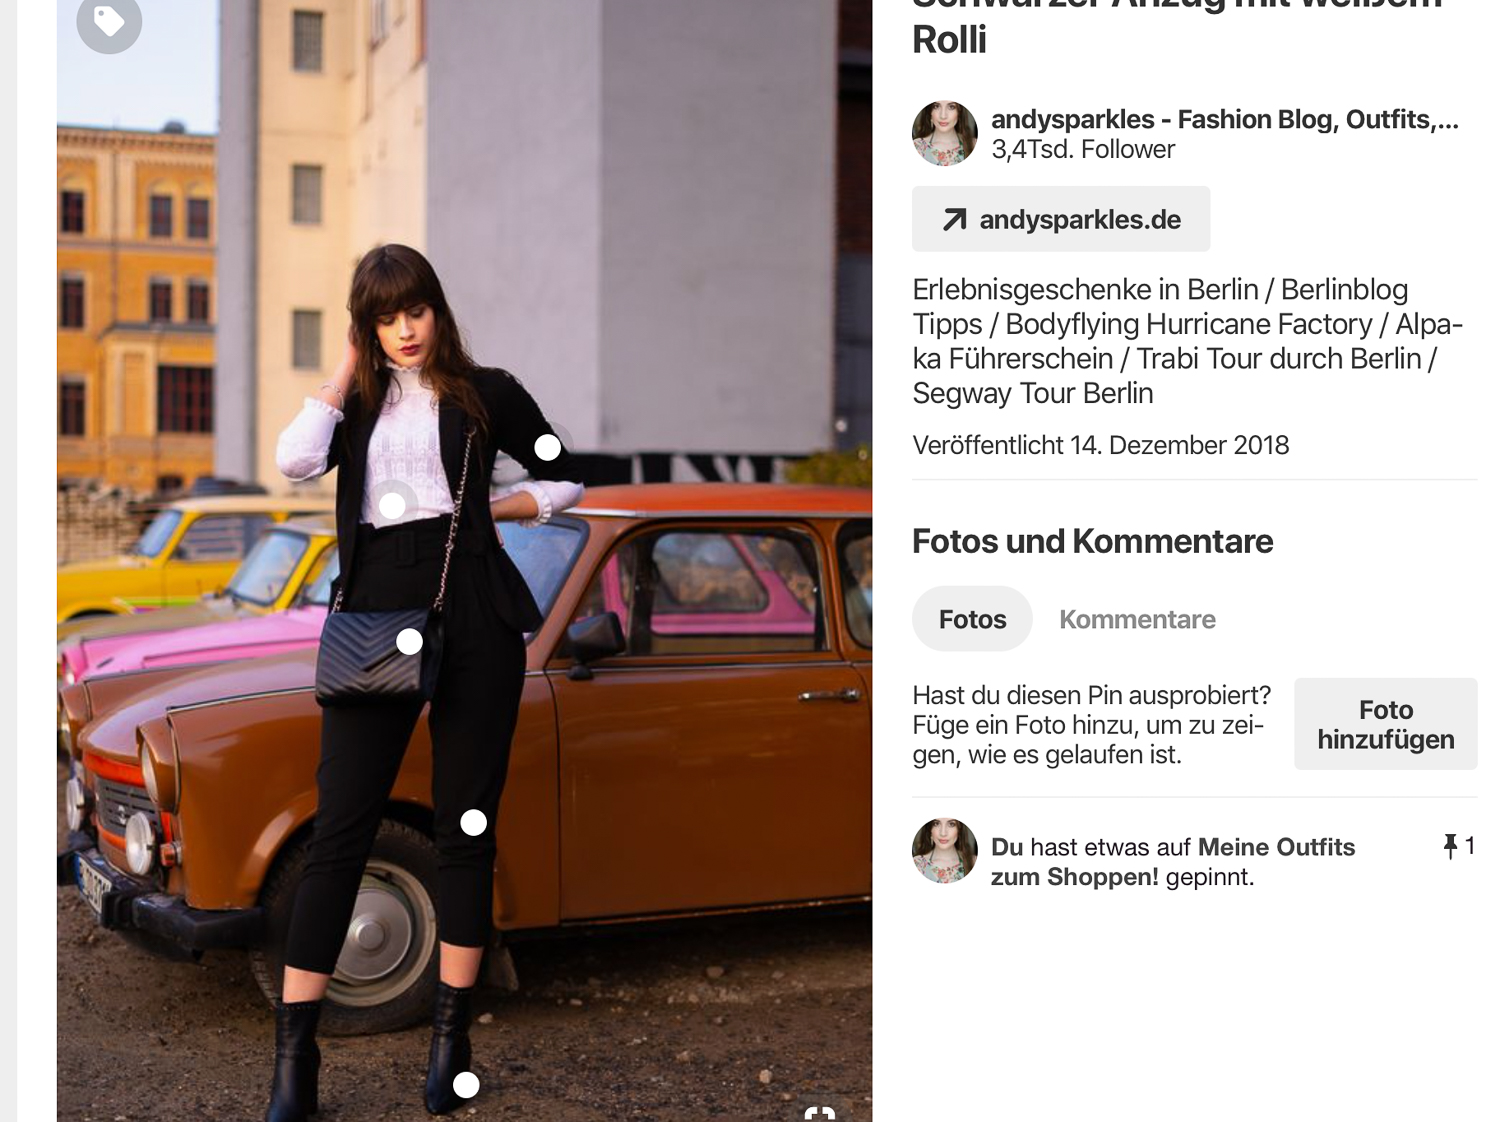 Shoppen auf Pinterest-Pinterest Shop the Look-Modeblog Berlin-andysparkles